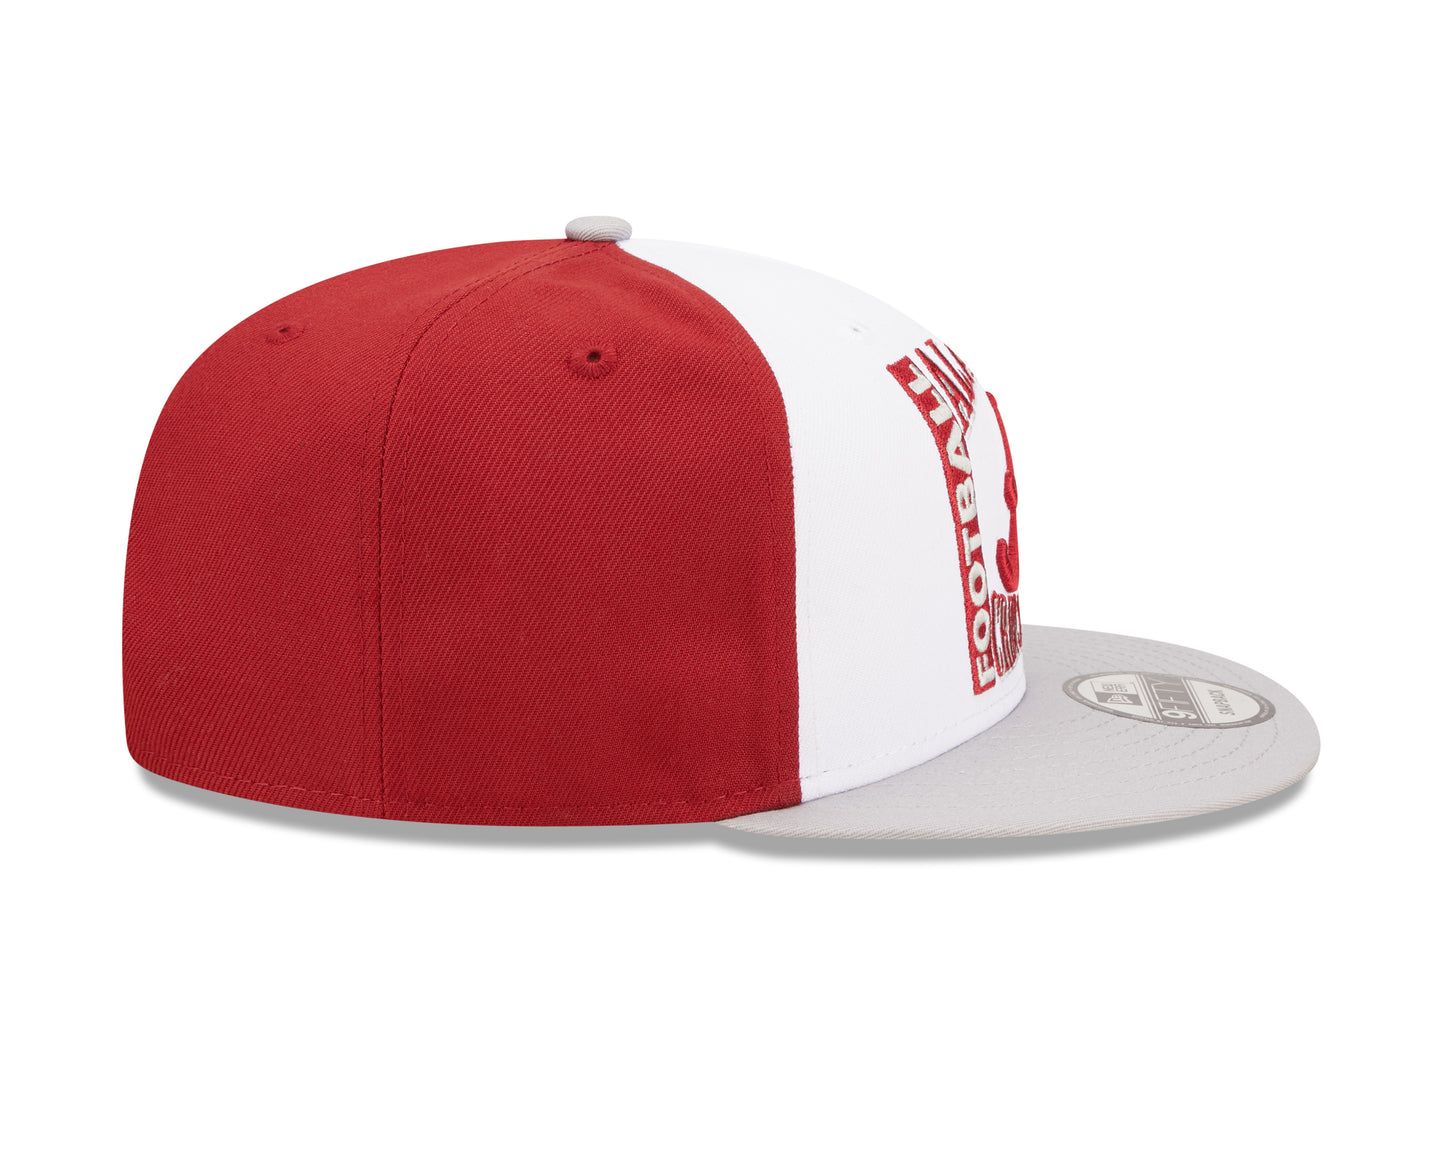 Alabama Crimson Tide Football Retro Sport 3 Tone New Era 9FIFTY Snapback Hat